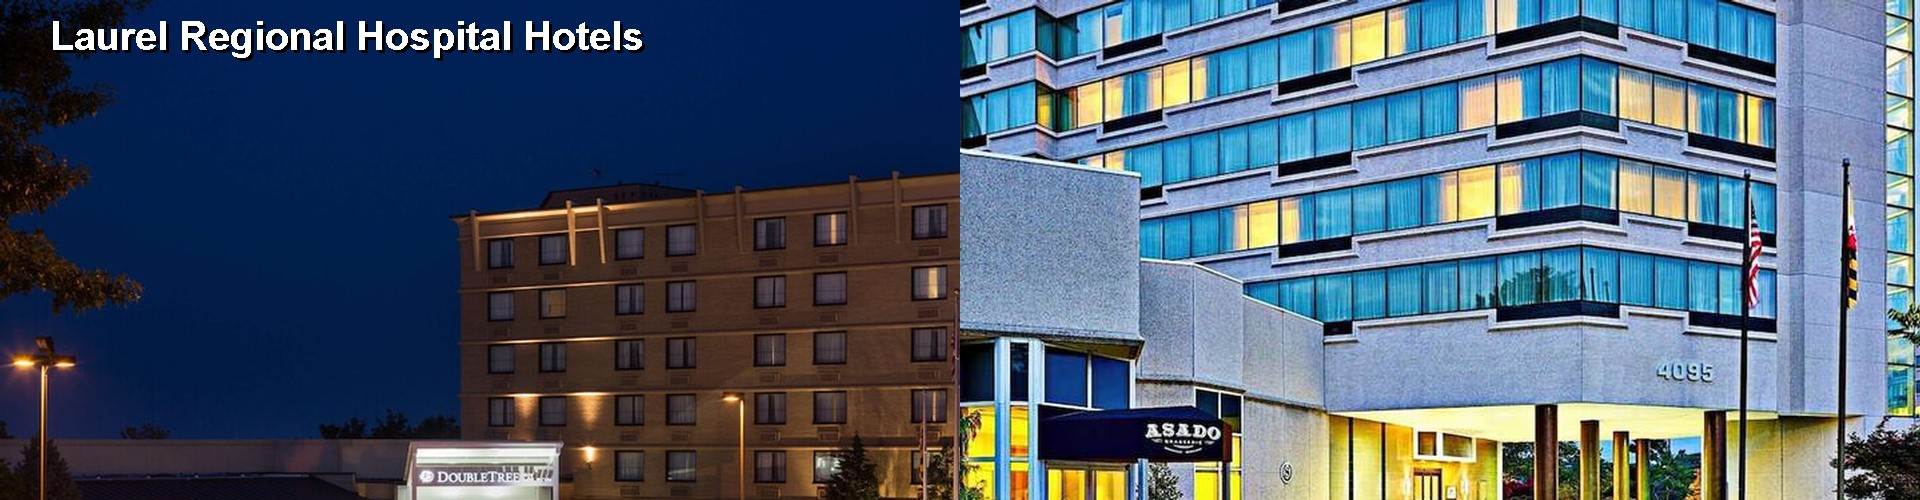 4 Best Hotels near Laurel Regional Hospital